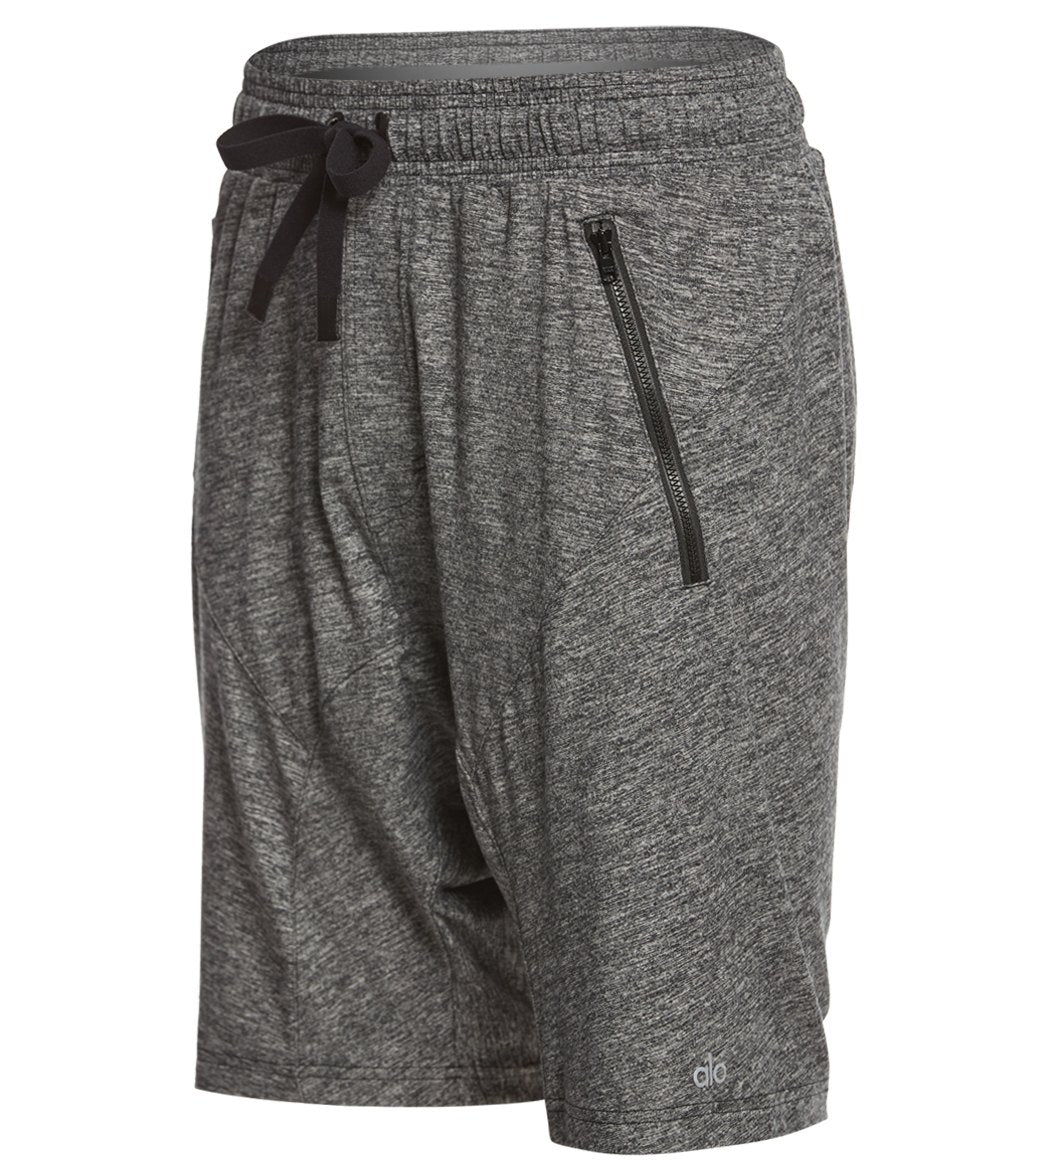 Alo Yoga Men's Drop Crotch Workout Shorts at YogaOutlet.com - Free Shipping  –